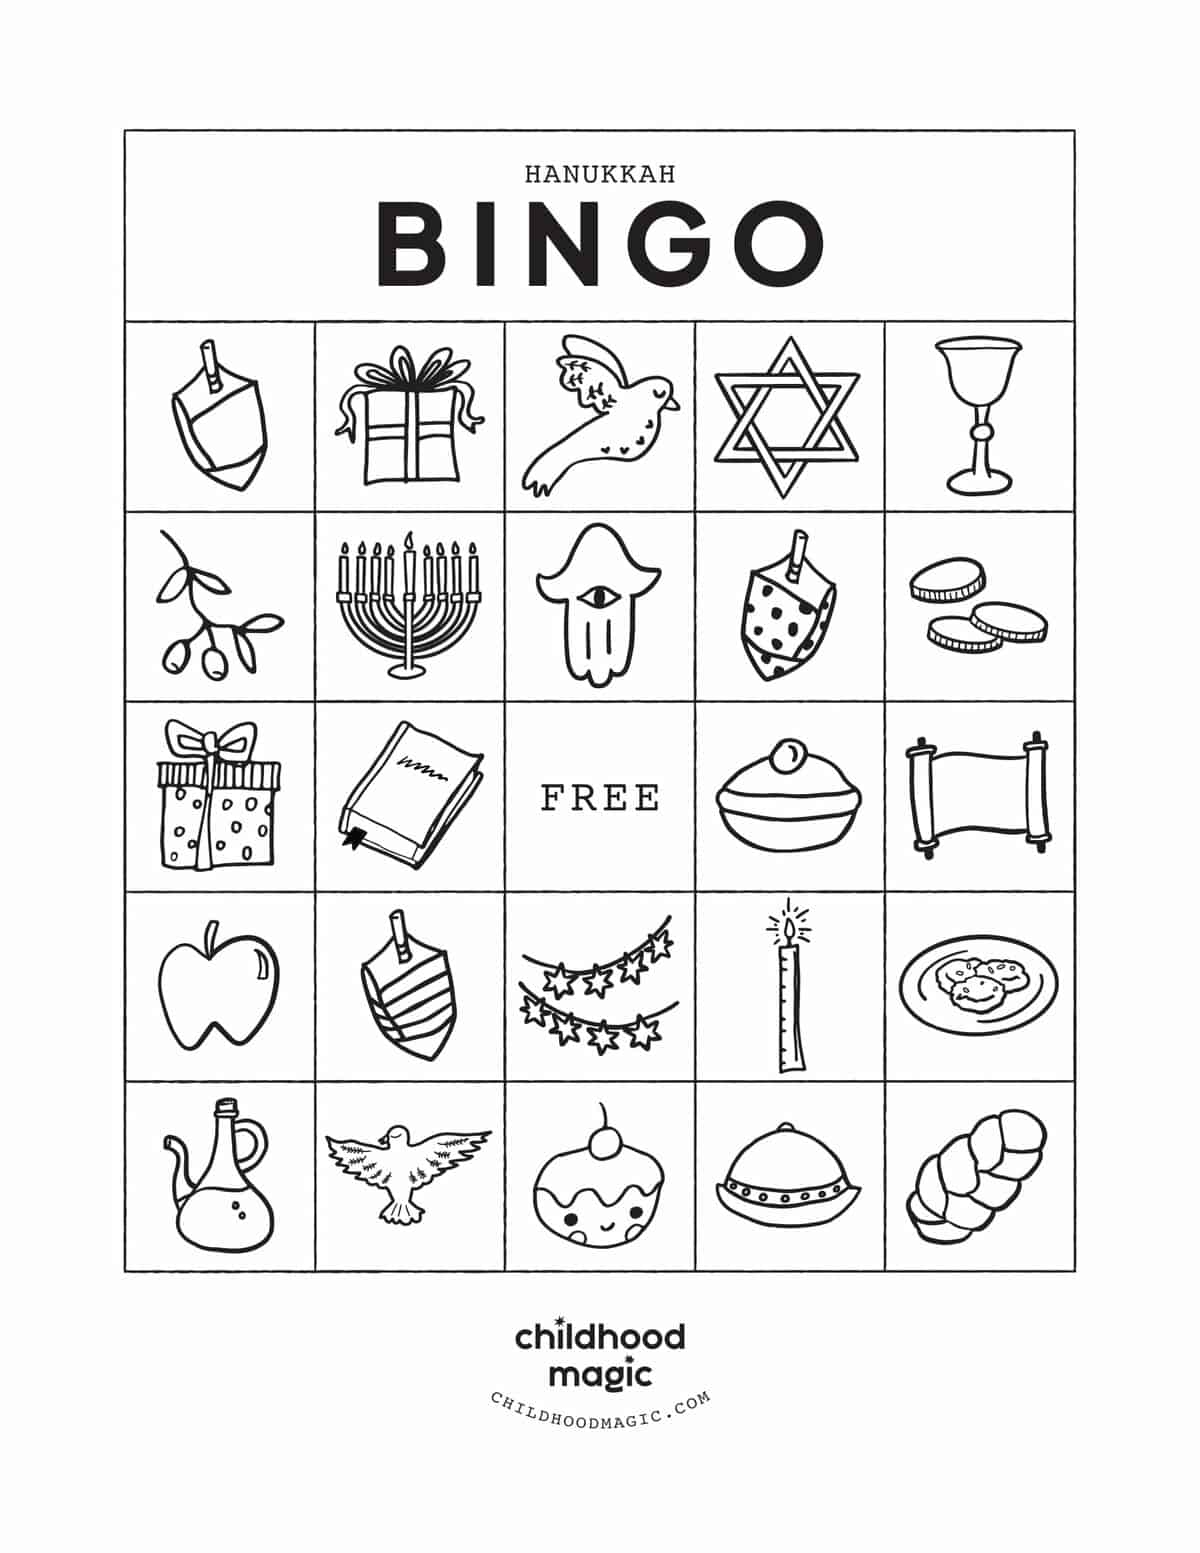 Hanukkah symbols in black and white on a printable Bingo card. 